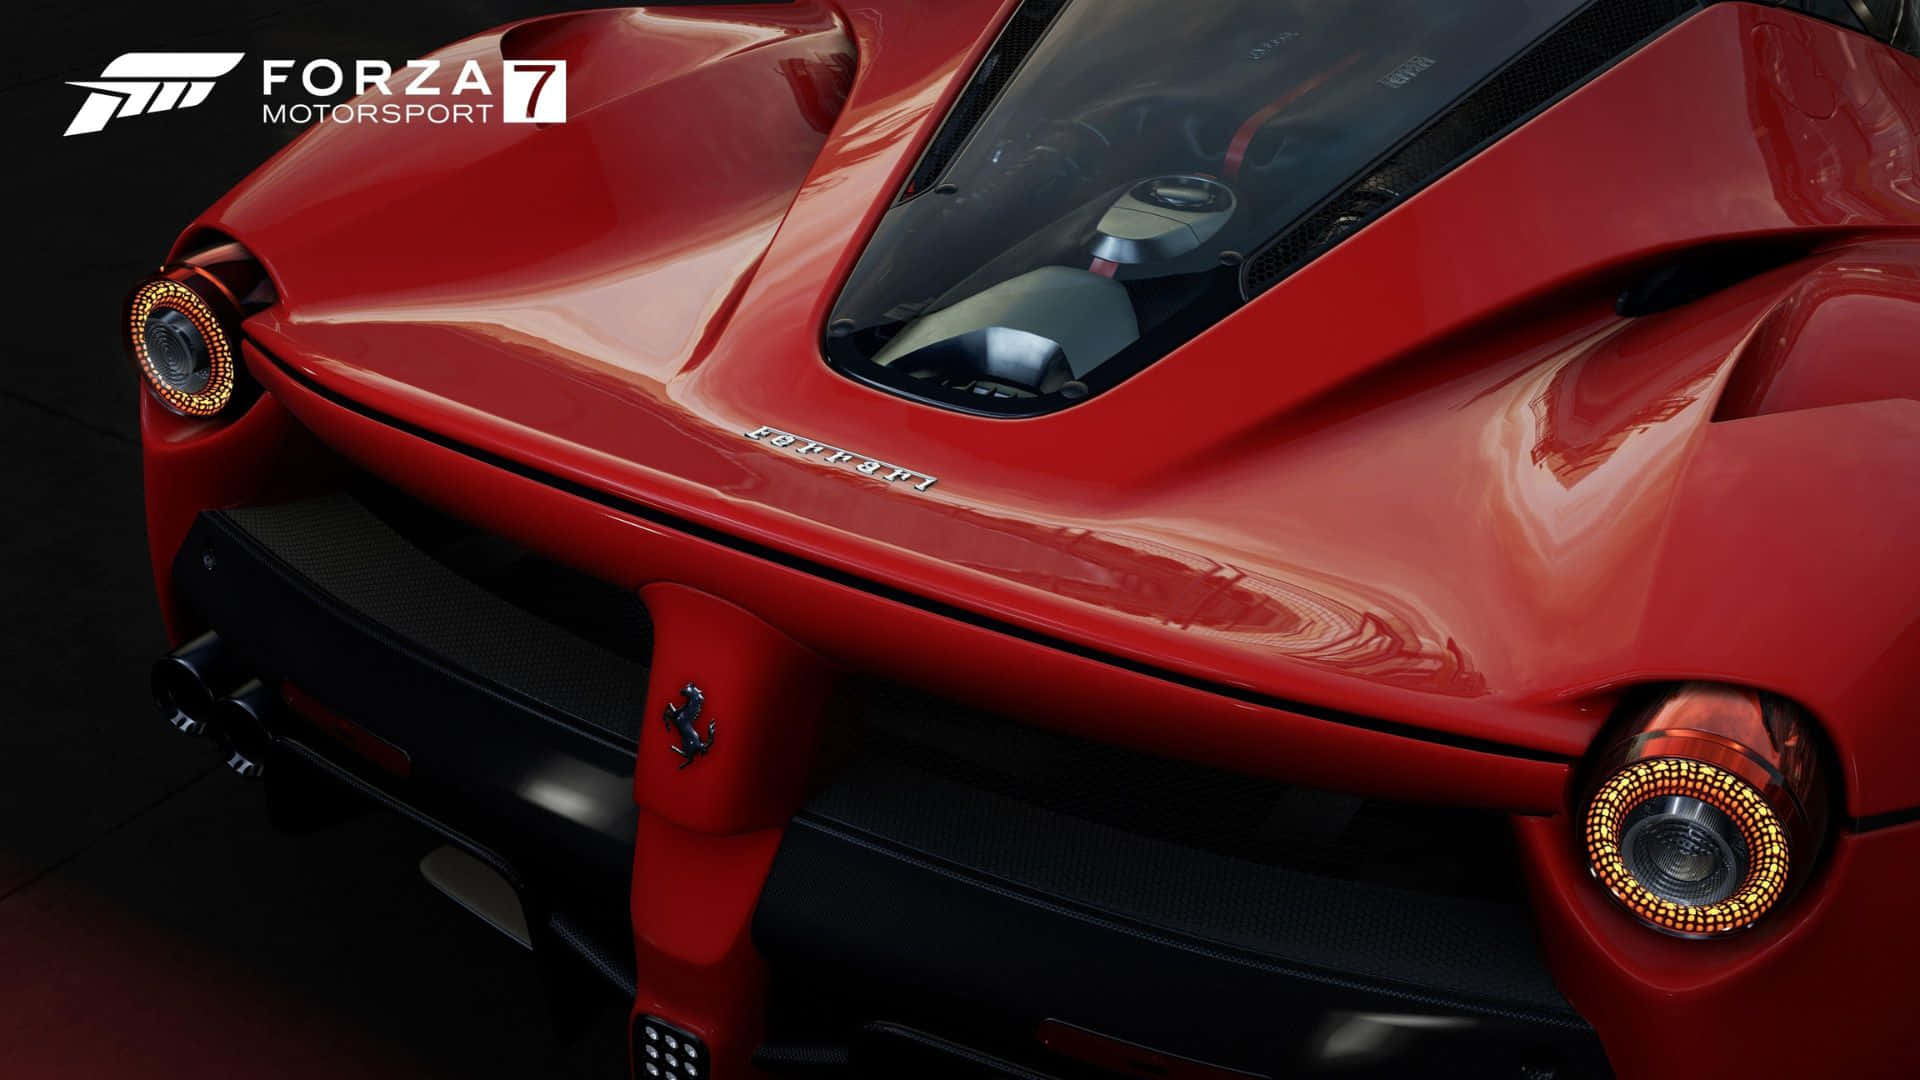 Hd Forza Motorsport 7 Background Ferrari Laferrari